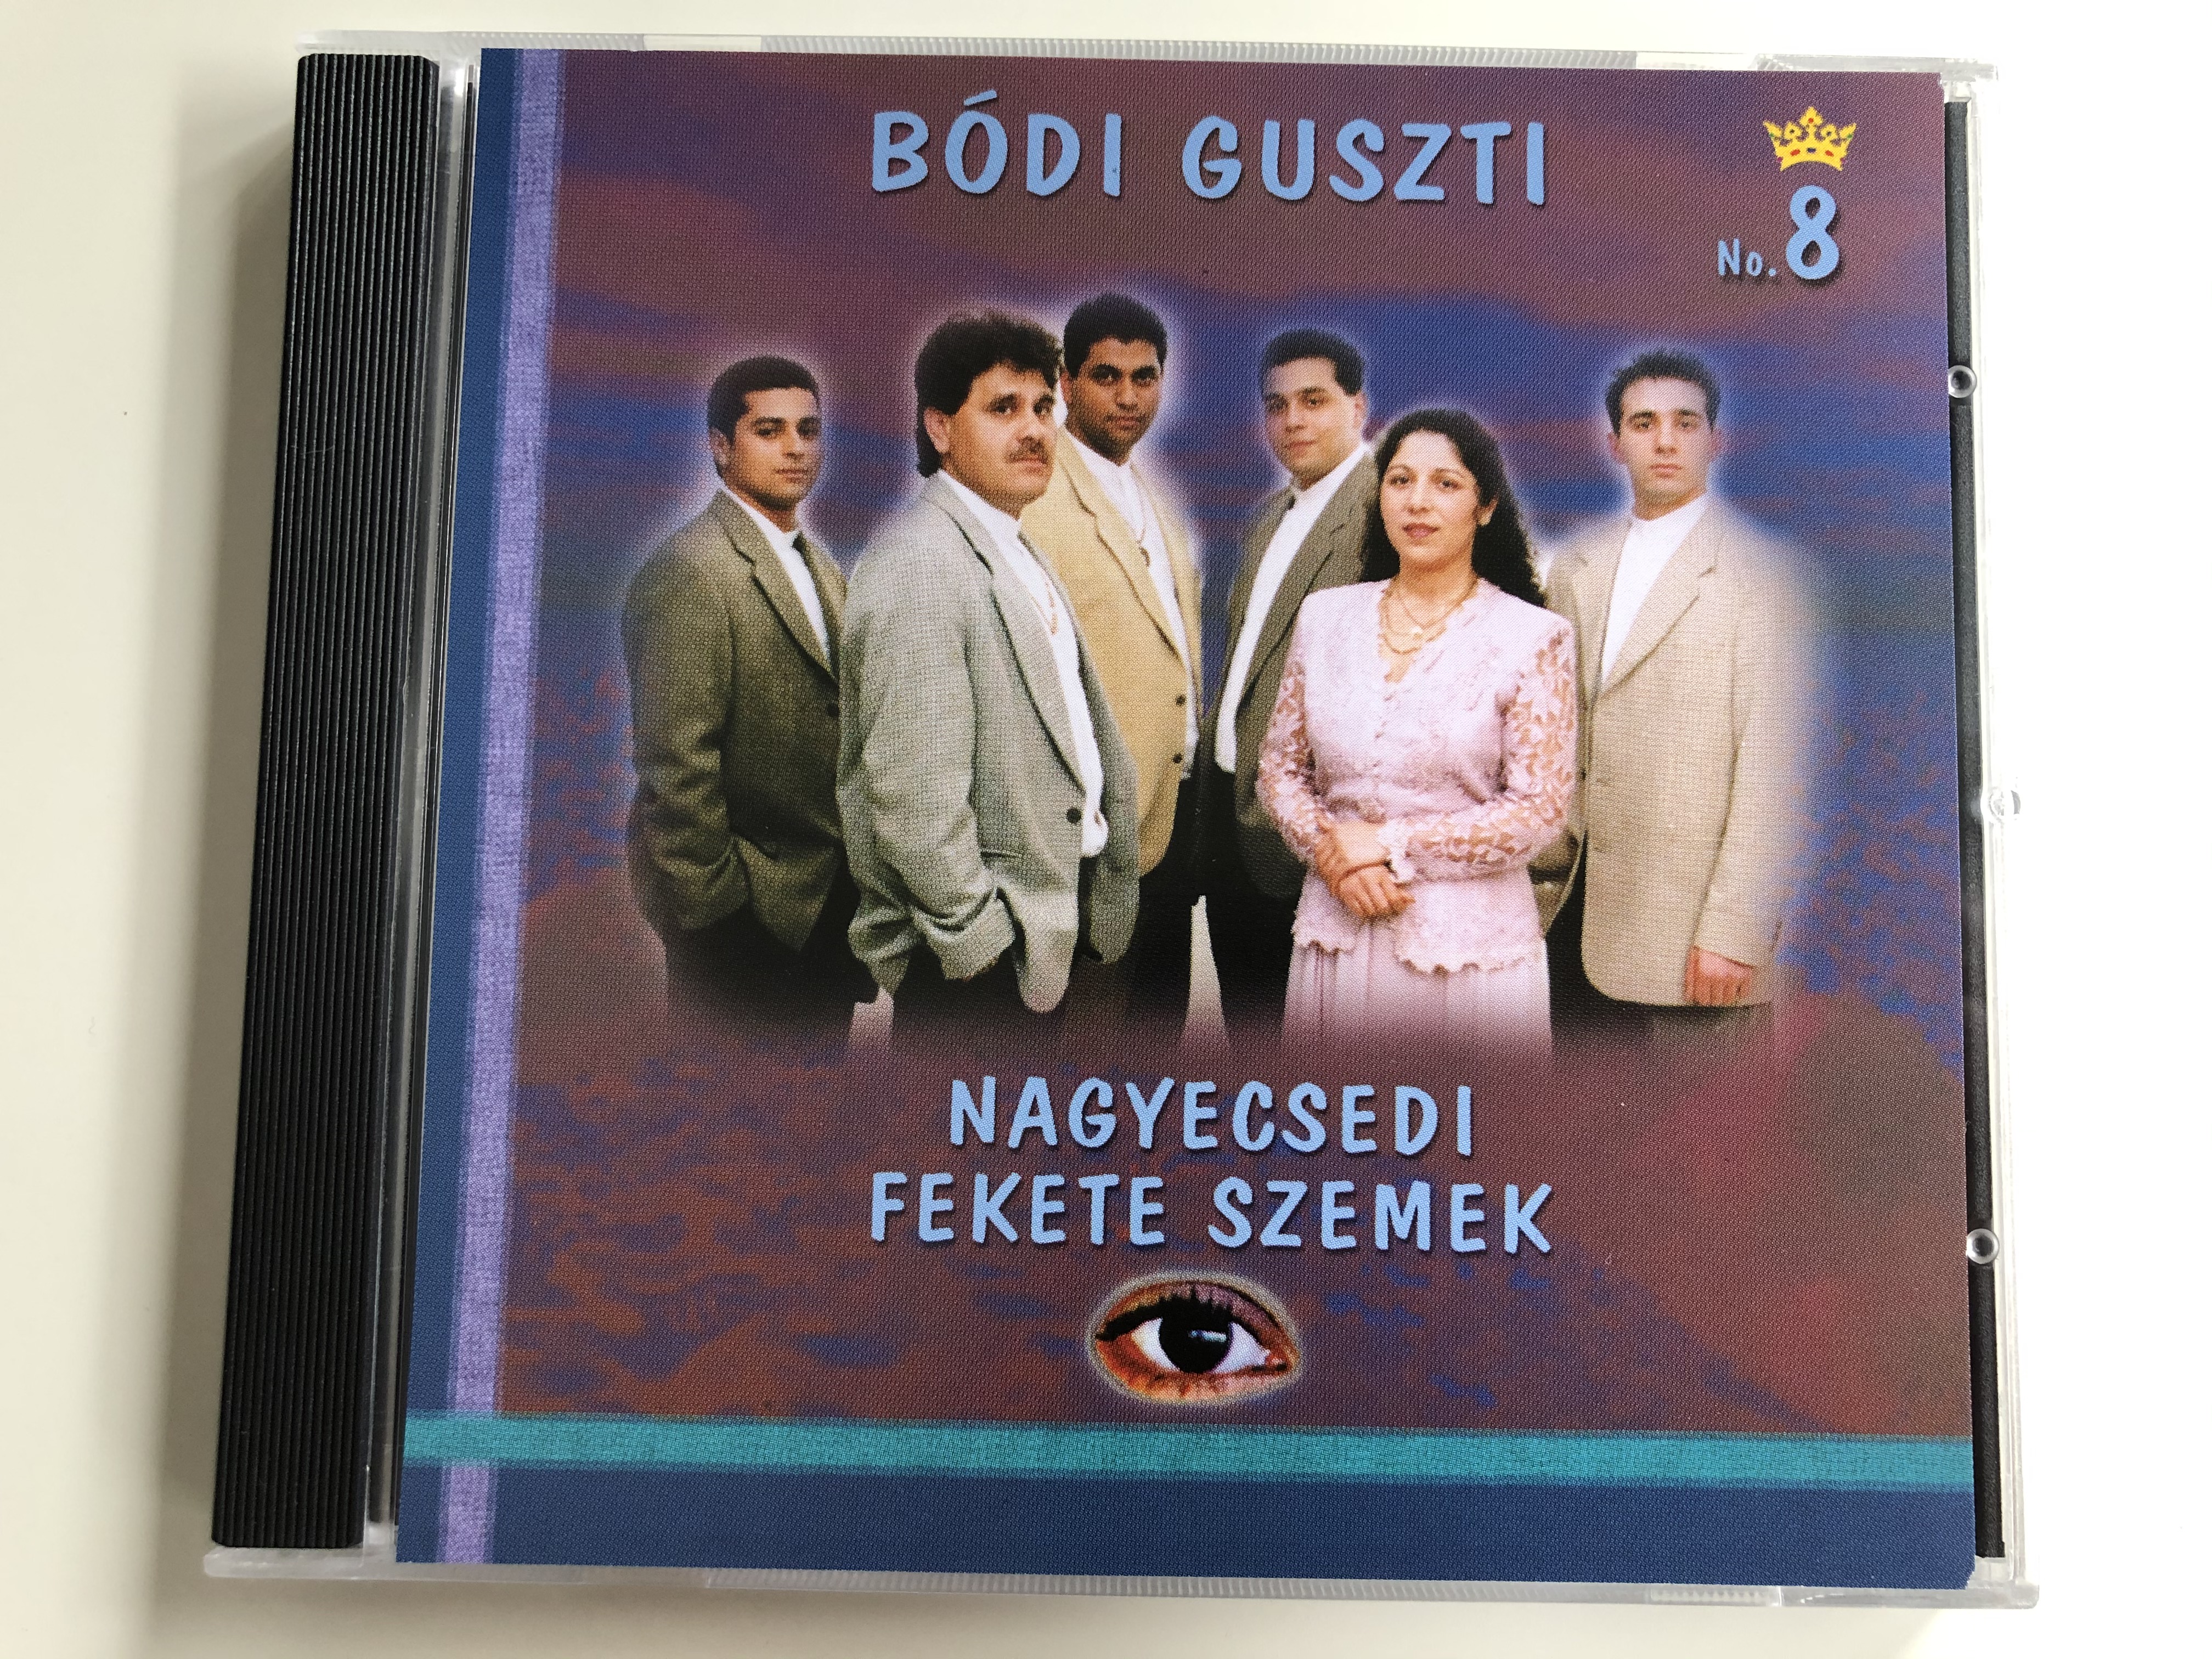 bodi-guszti-no.-8-nagyecsedi-fekete-szemek-mc-cd-audio-cd-1997-fsz-20038cd-1-.jpg